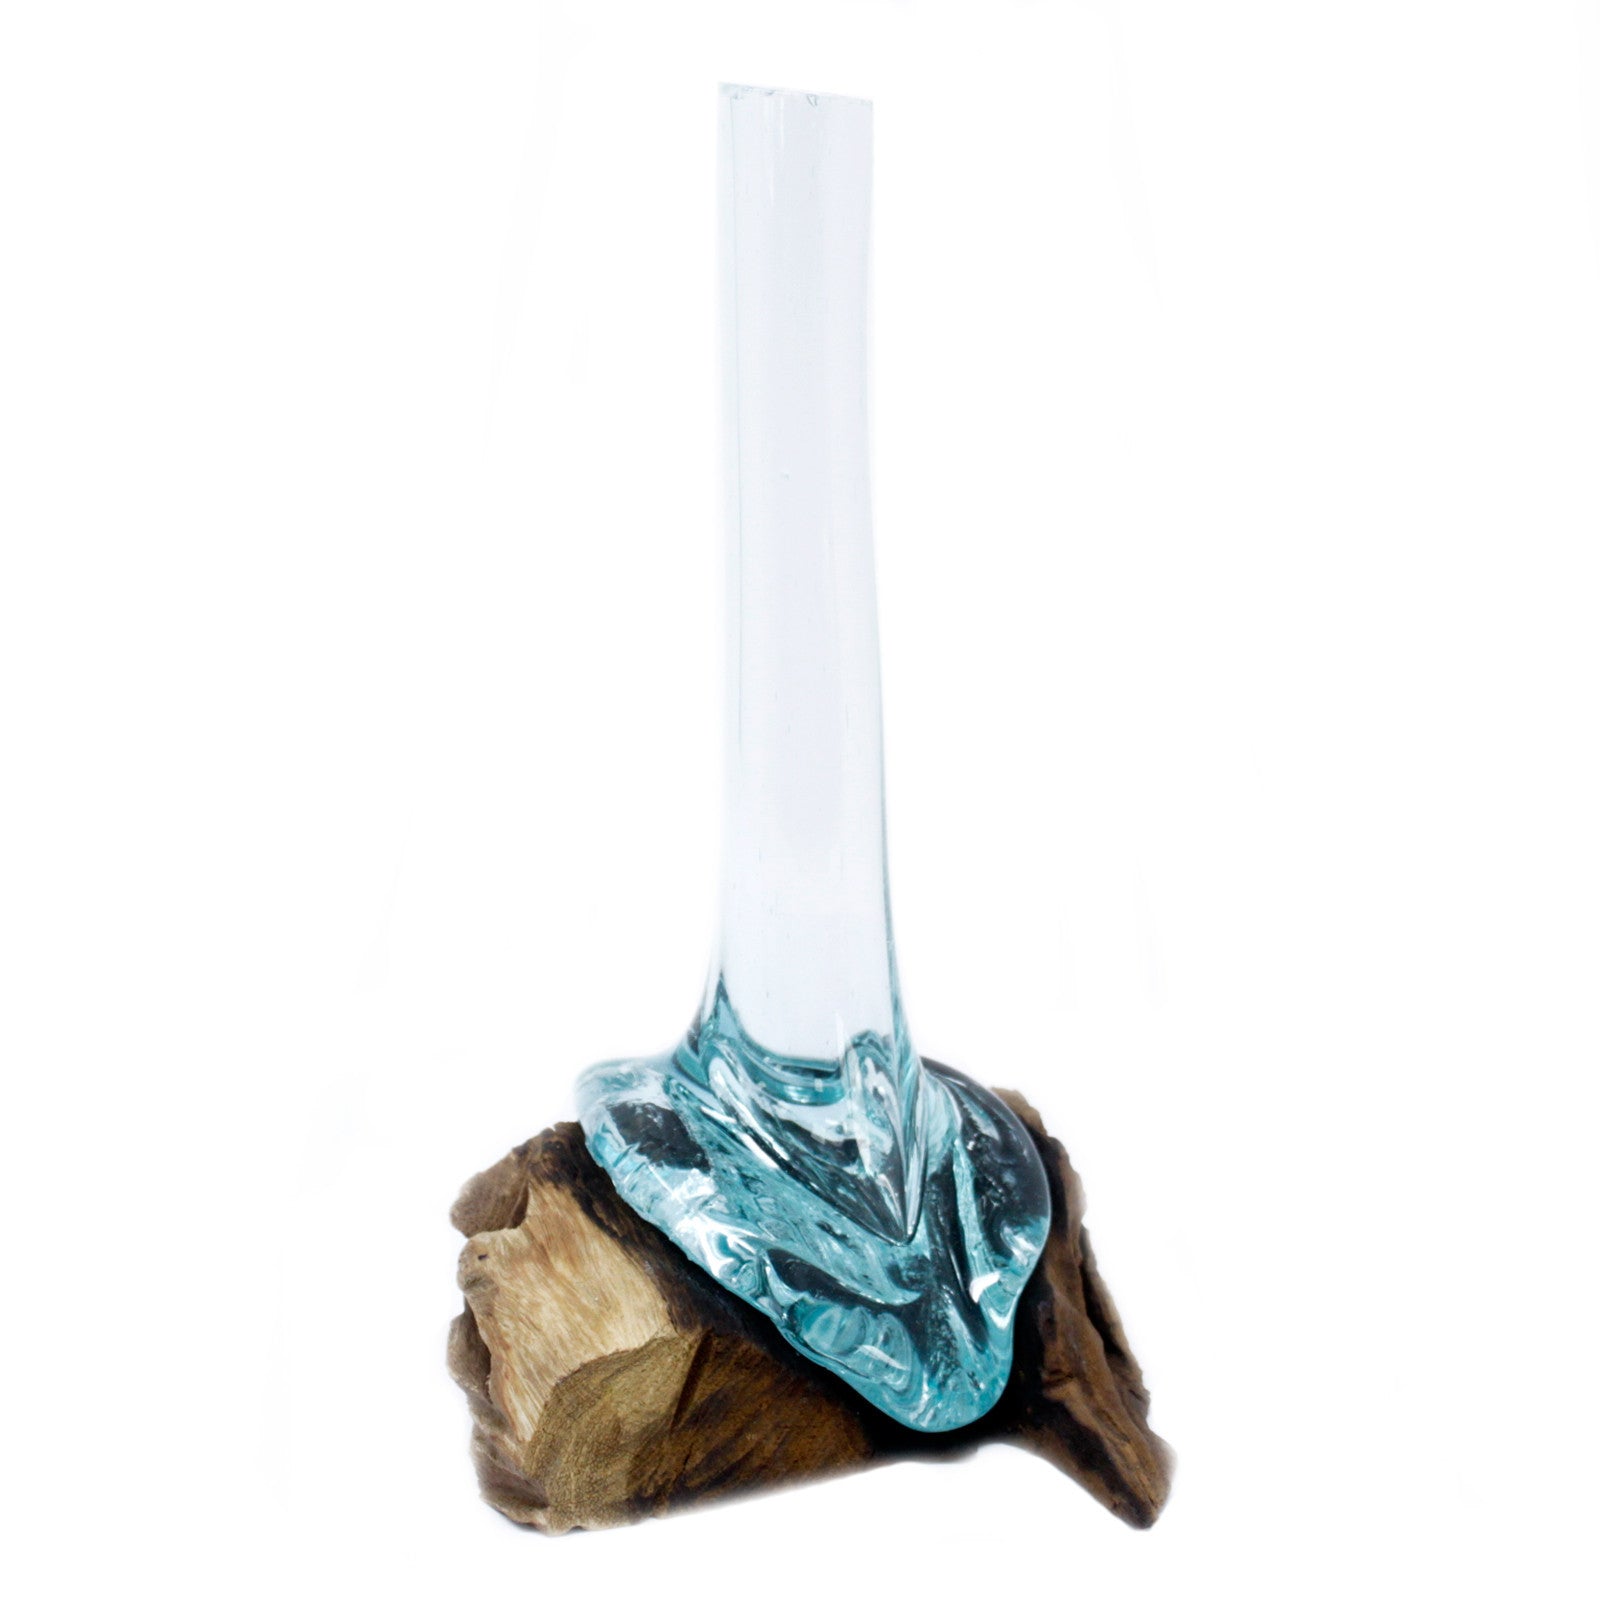 Geschmolzenes Glas auf Holz - "Kim" - Vase - BEPANO